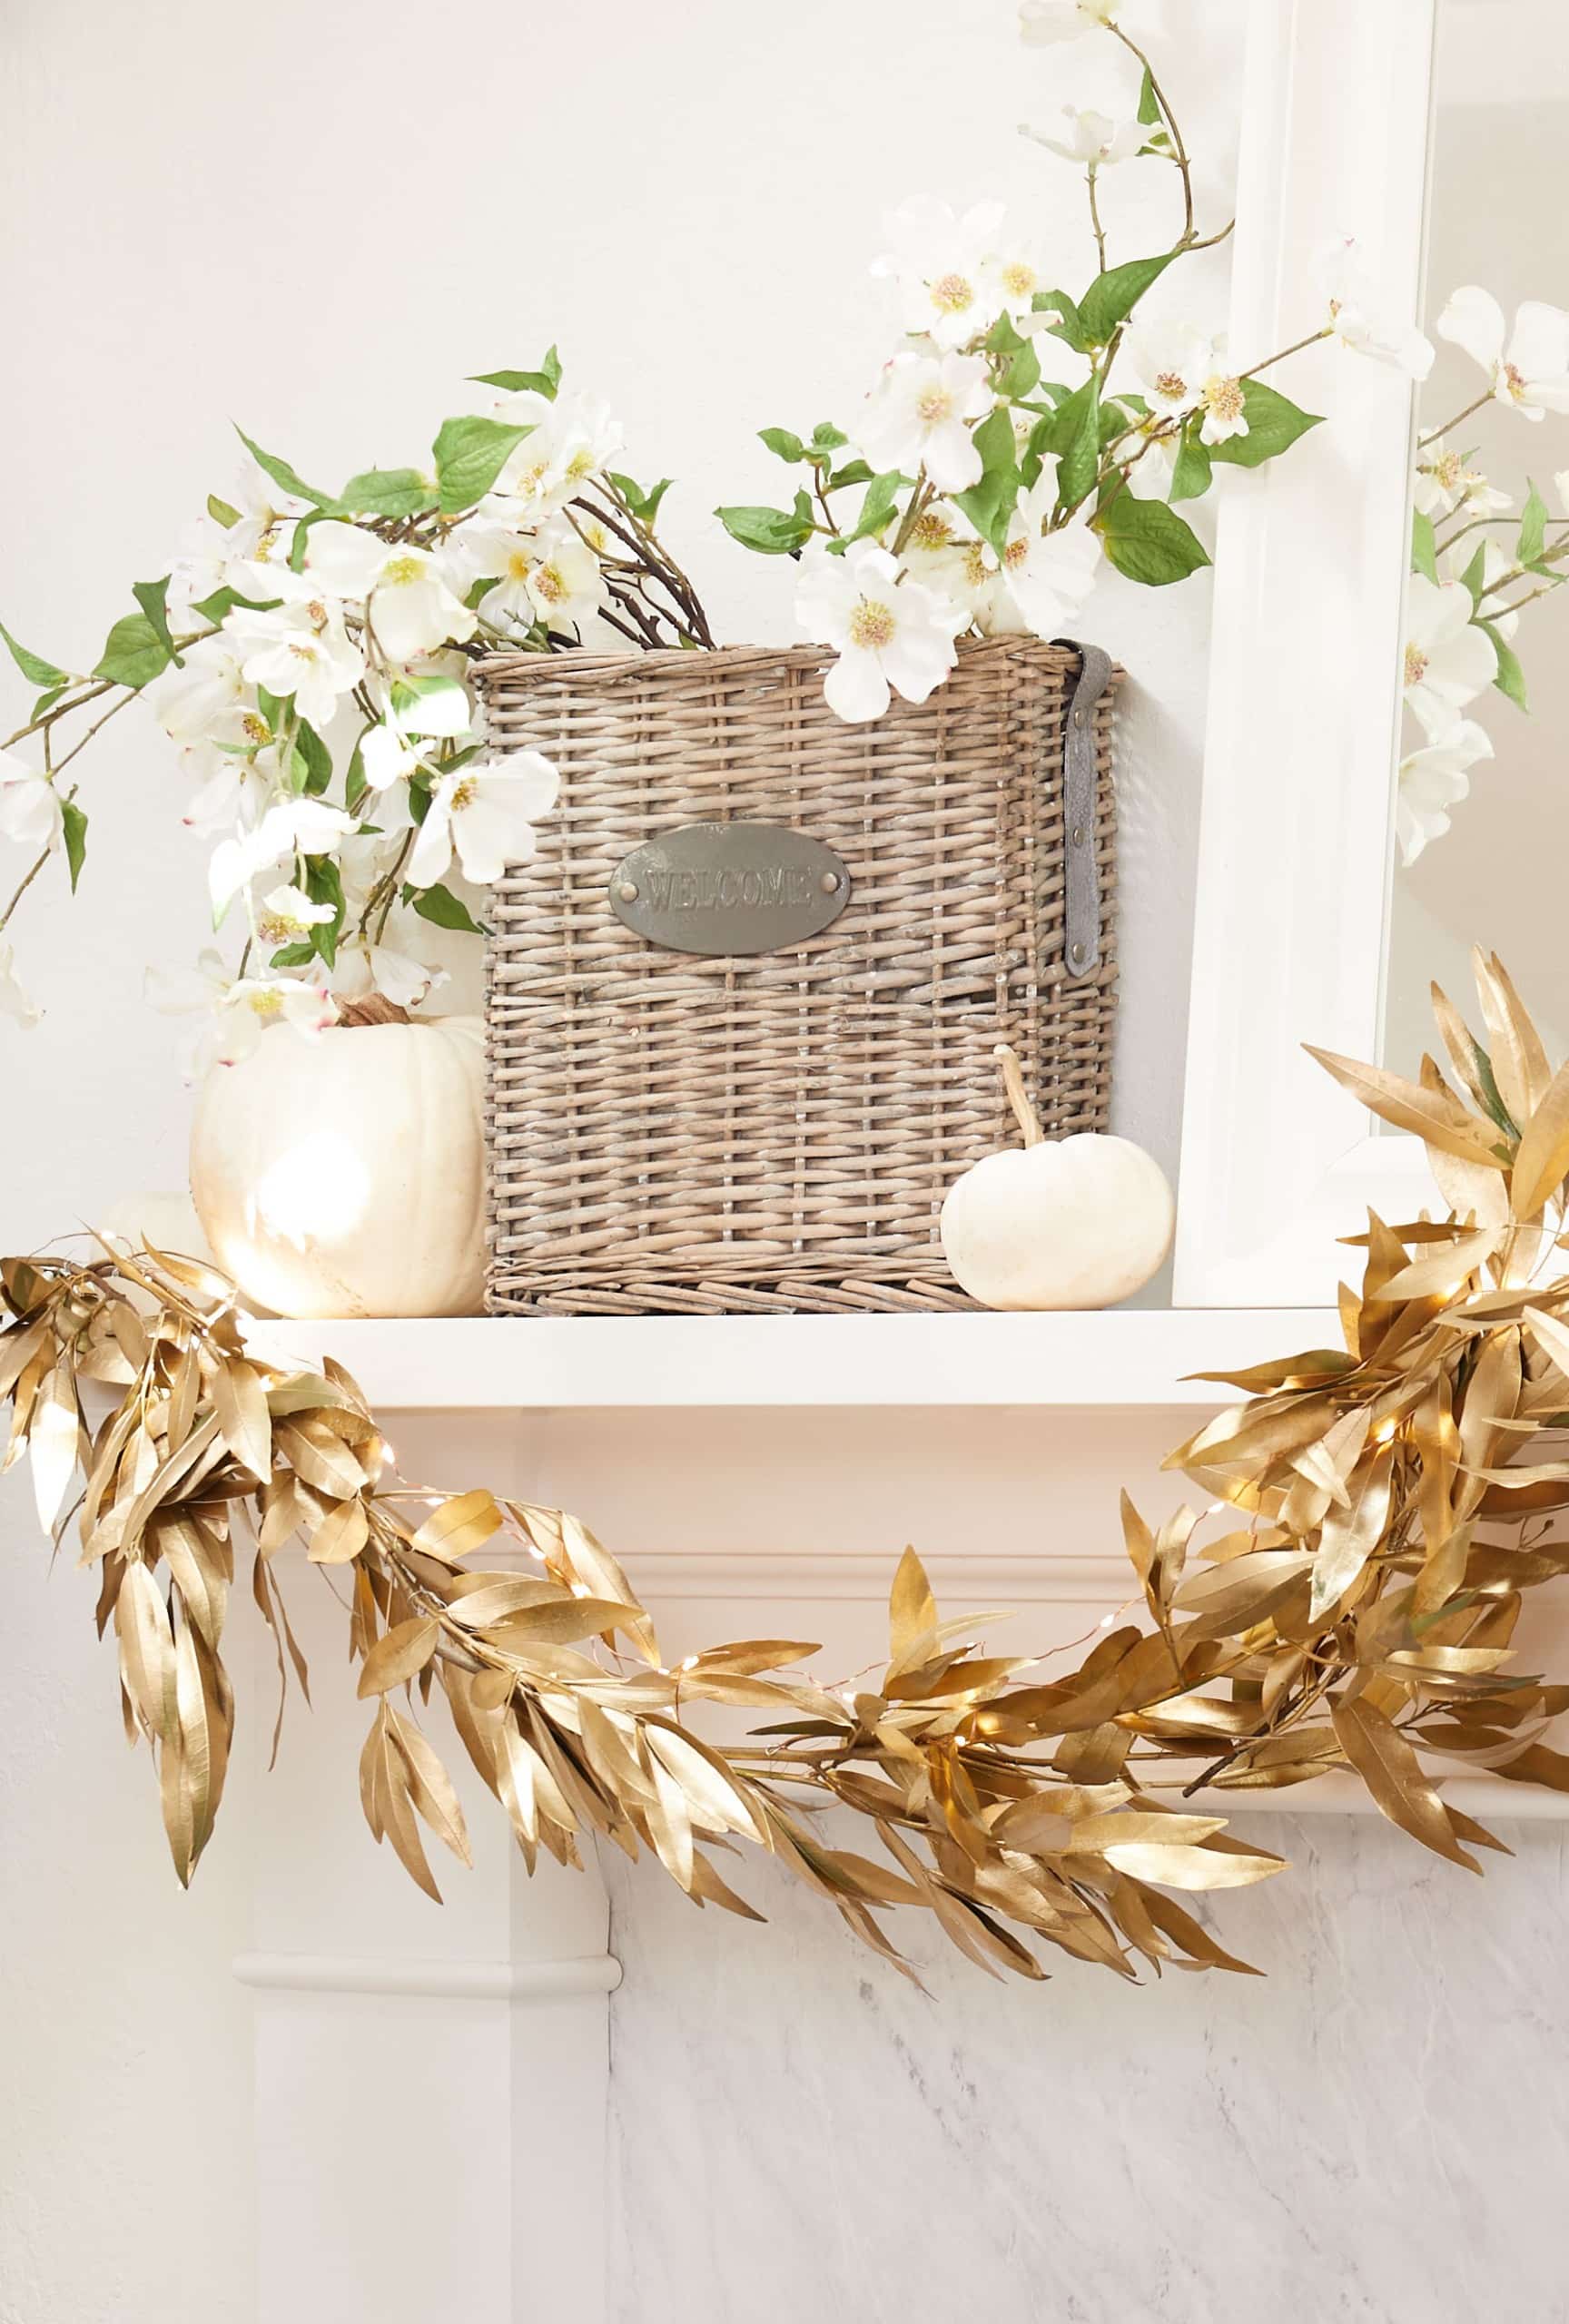 DIY Copper Magnolia Wreath from Paper Bags - DIY Beautify